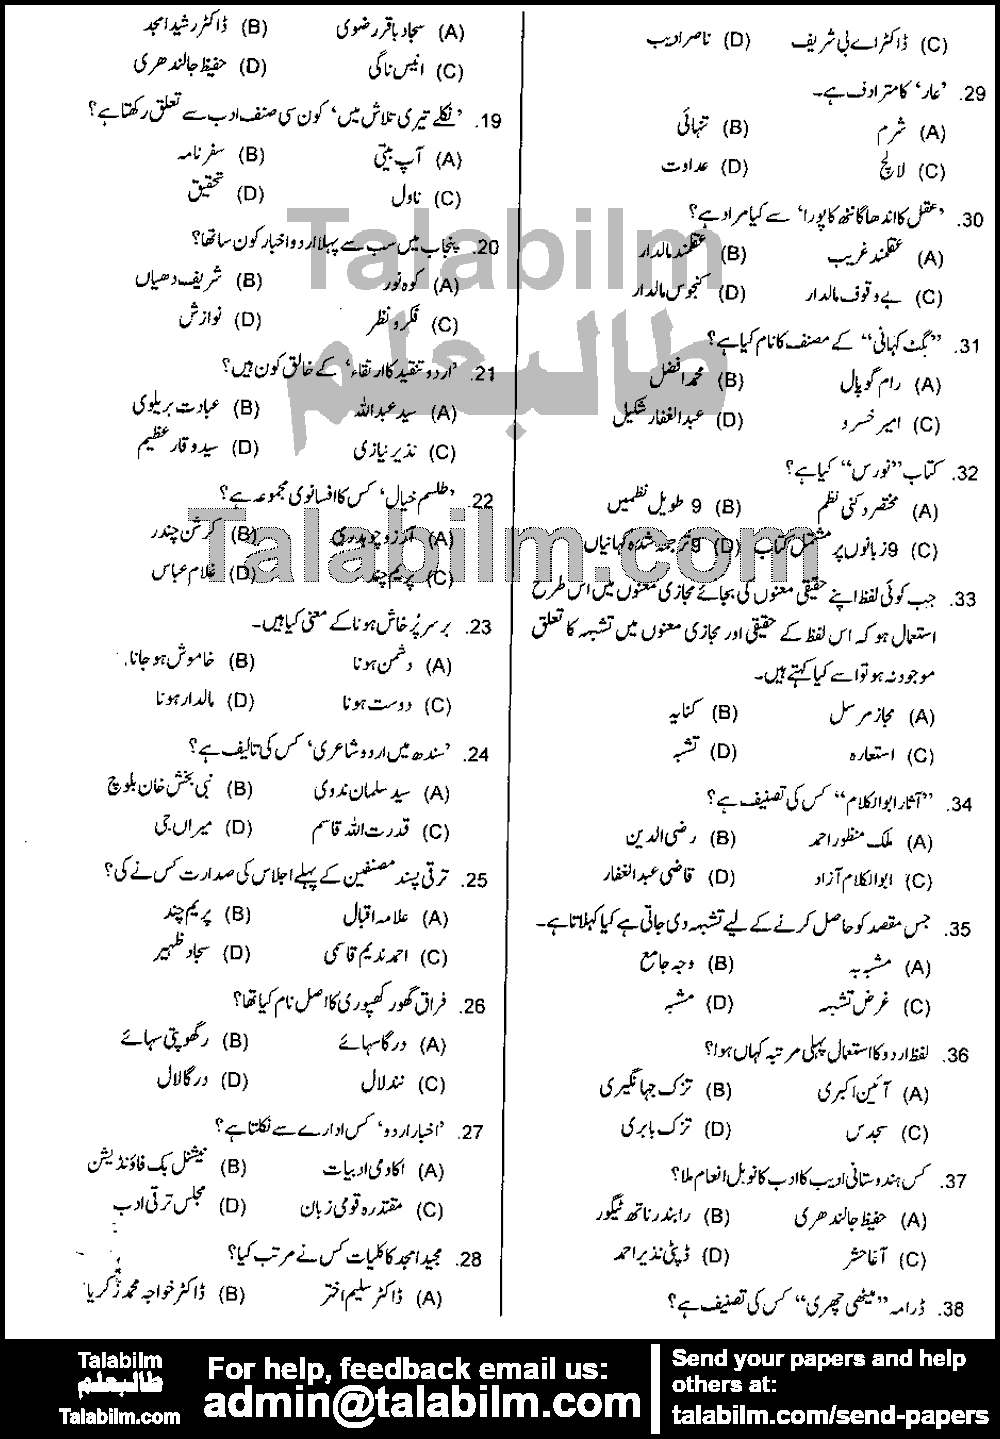 Urdu Lecturer 0 past paper for 2017 Page No. 2